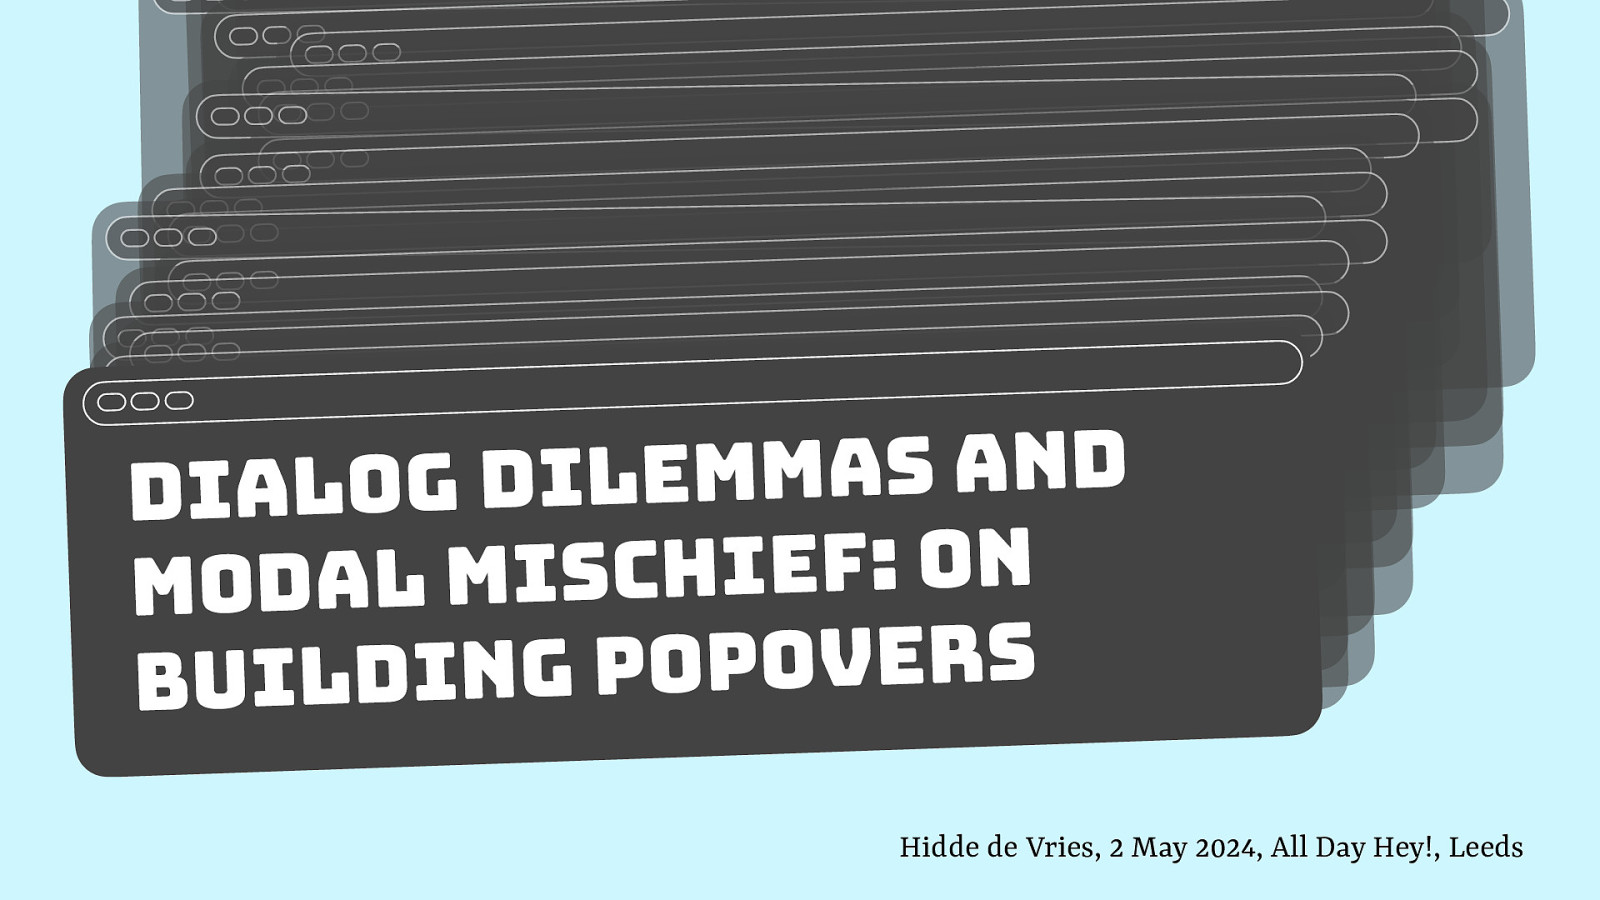 Dialog dilemmas and modal mischief: on building popovers by Hidde de Vries